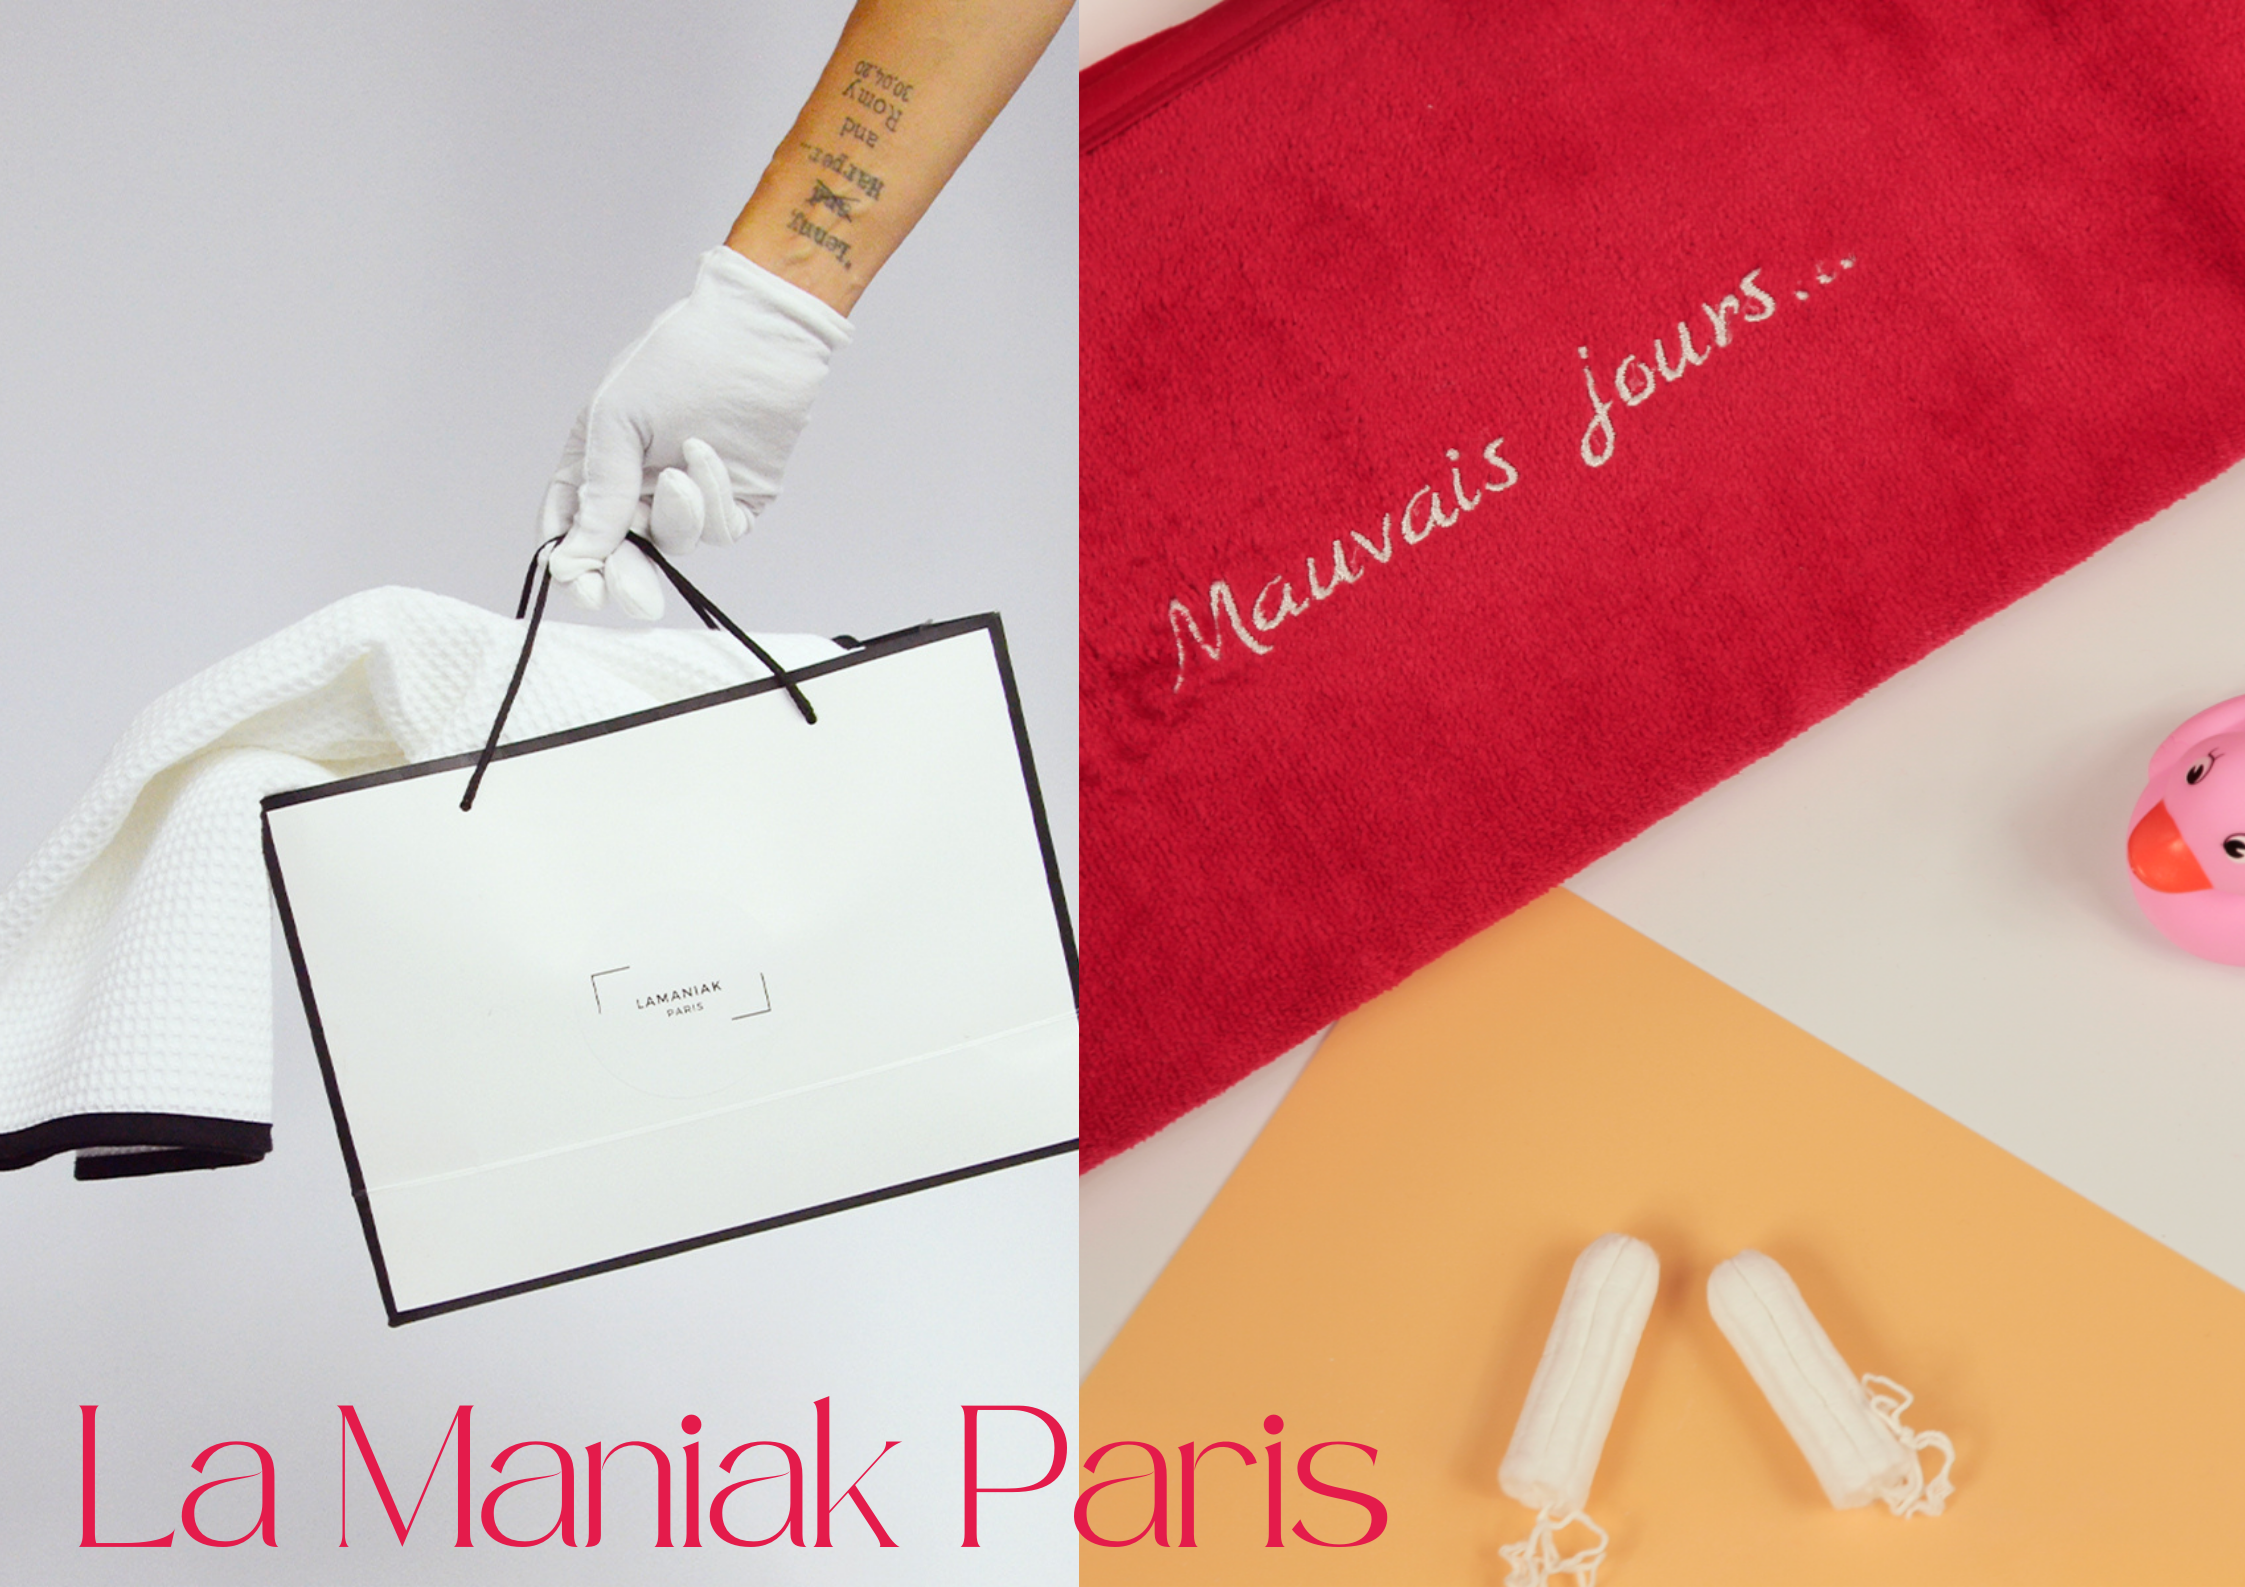 Meet La Maniak Paris: The Parisian towel and bath-wear brand we love.